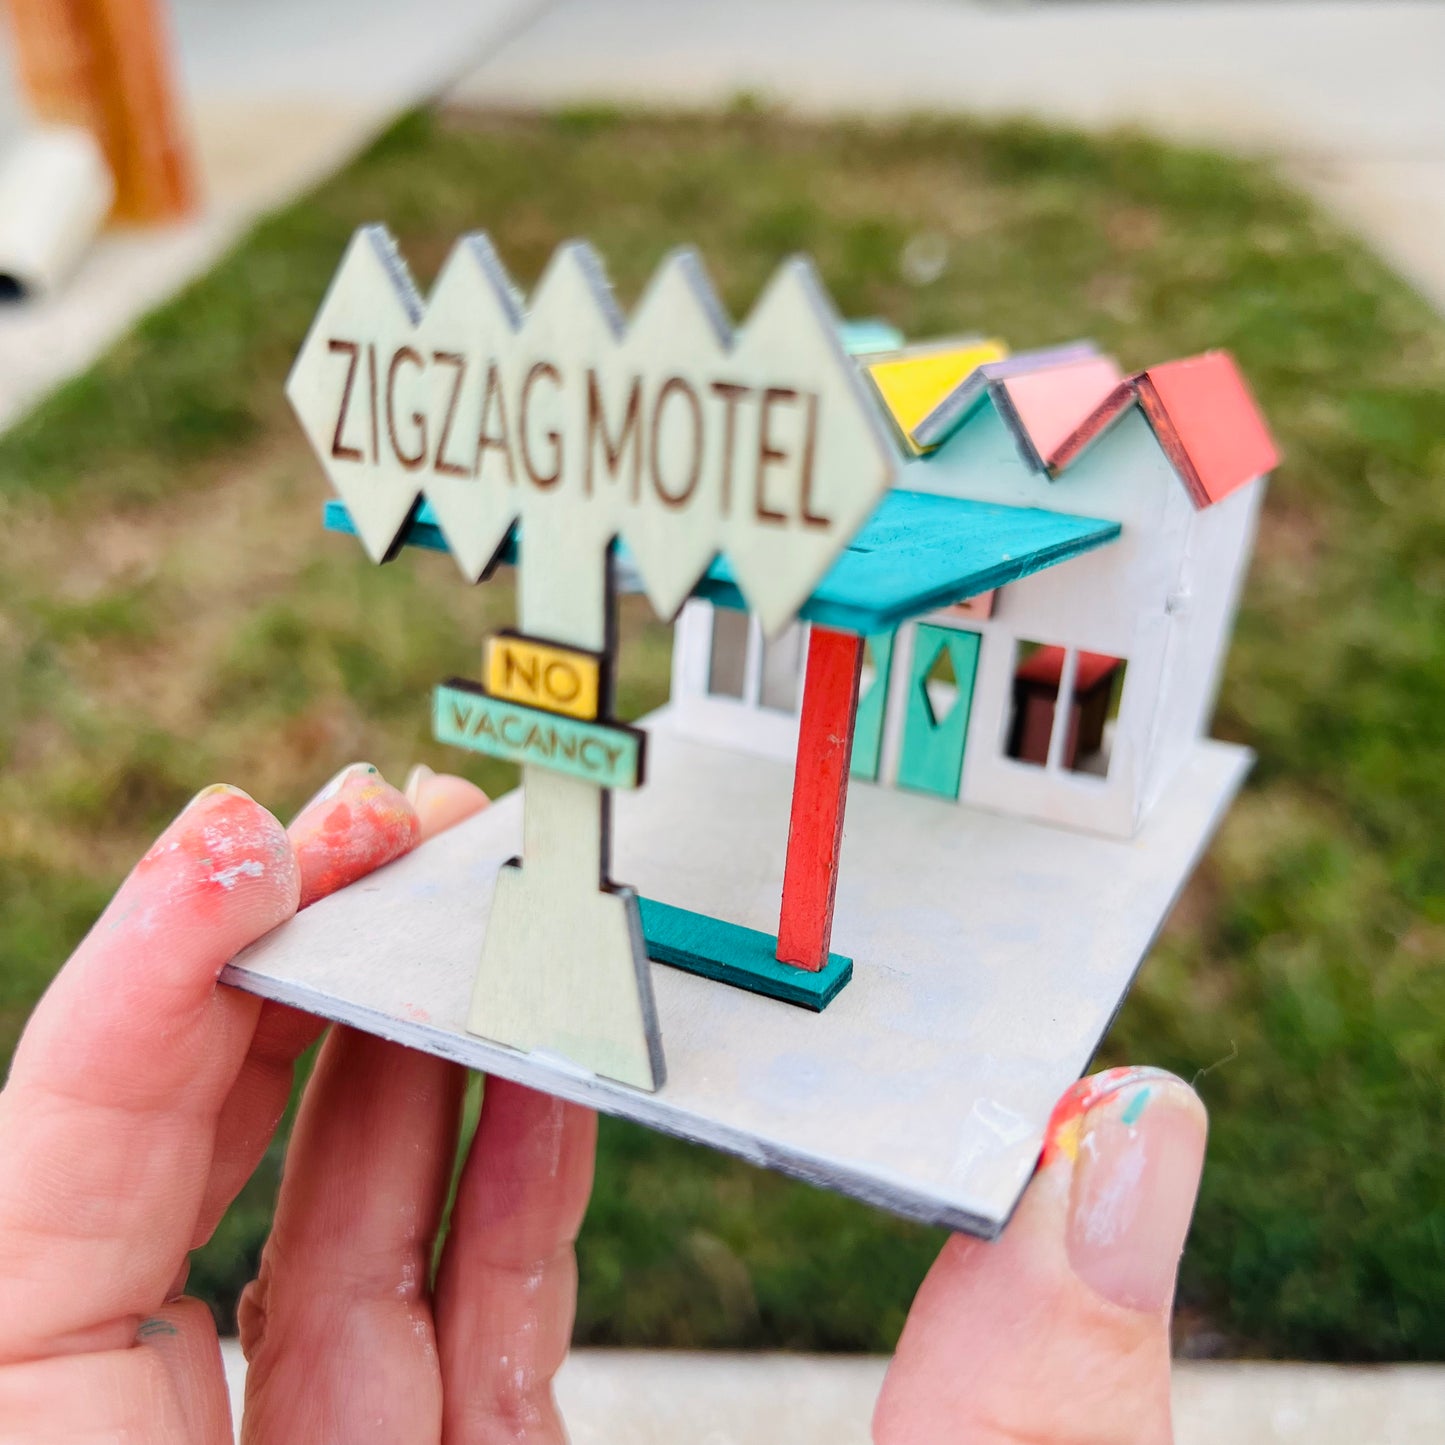 PRE ORDER Zigzag Motel Apartments, Mini Town Building Kits 1:144